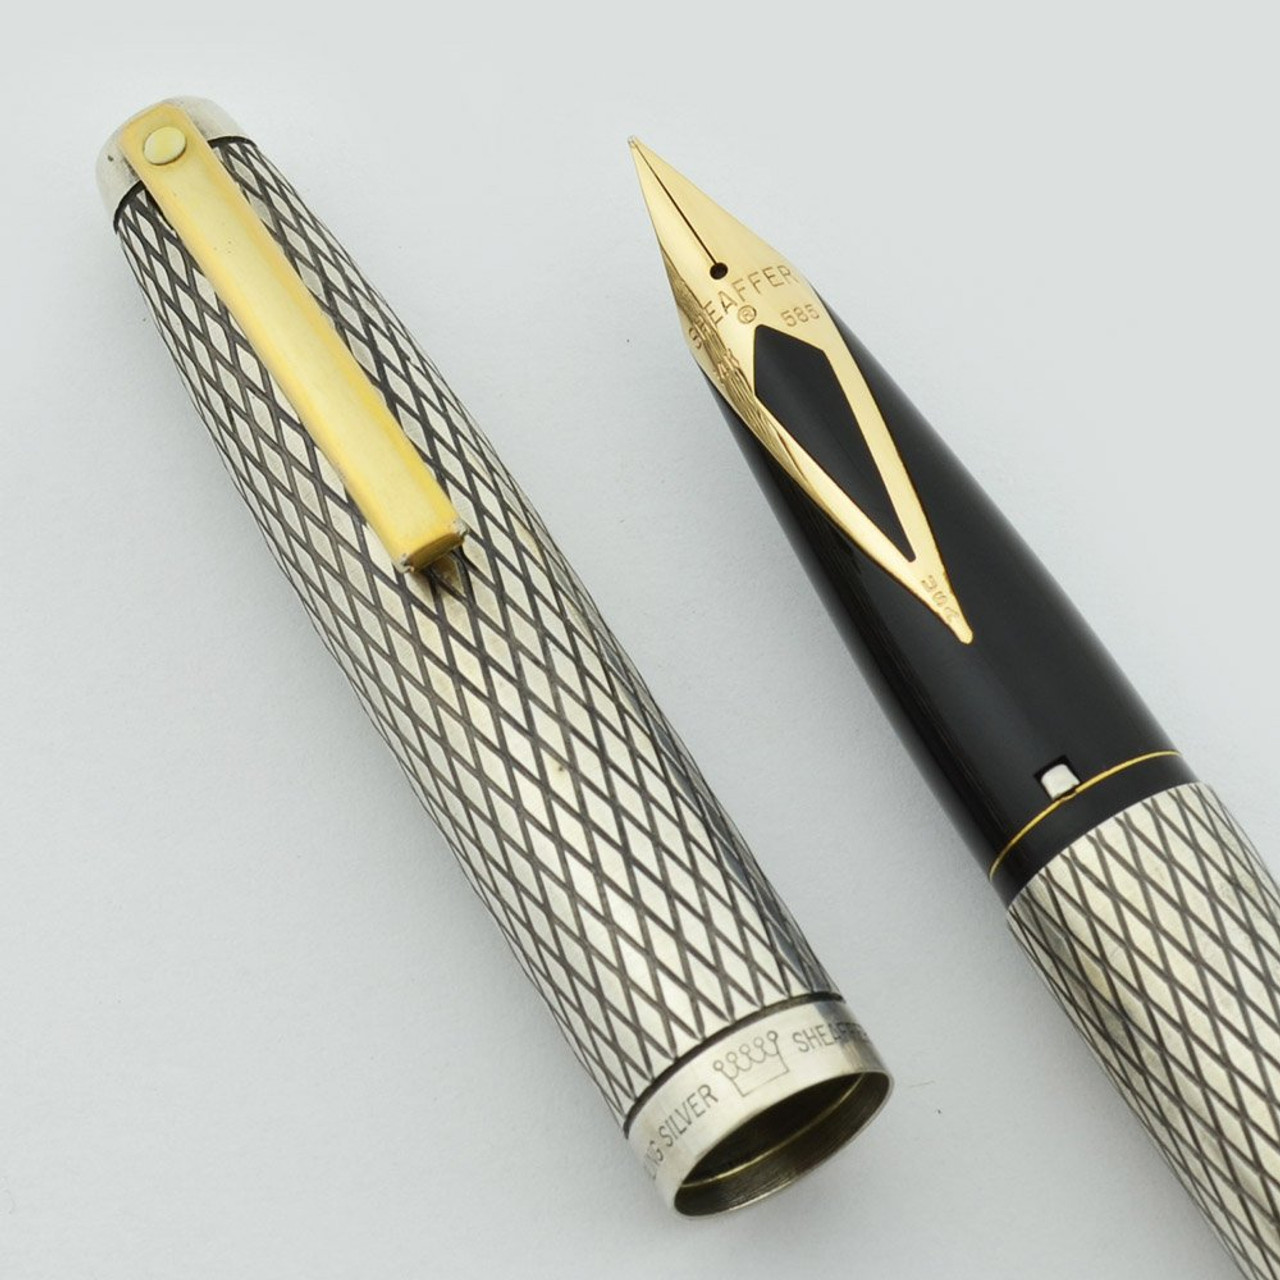 Sheaffer Silver Imperial Fountain Pen - Cartridge Pen, Sterling Diamond Design, Fine 14k Nib (Excellent, Works Well)